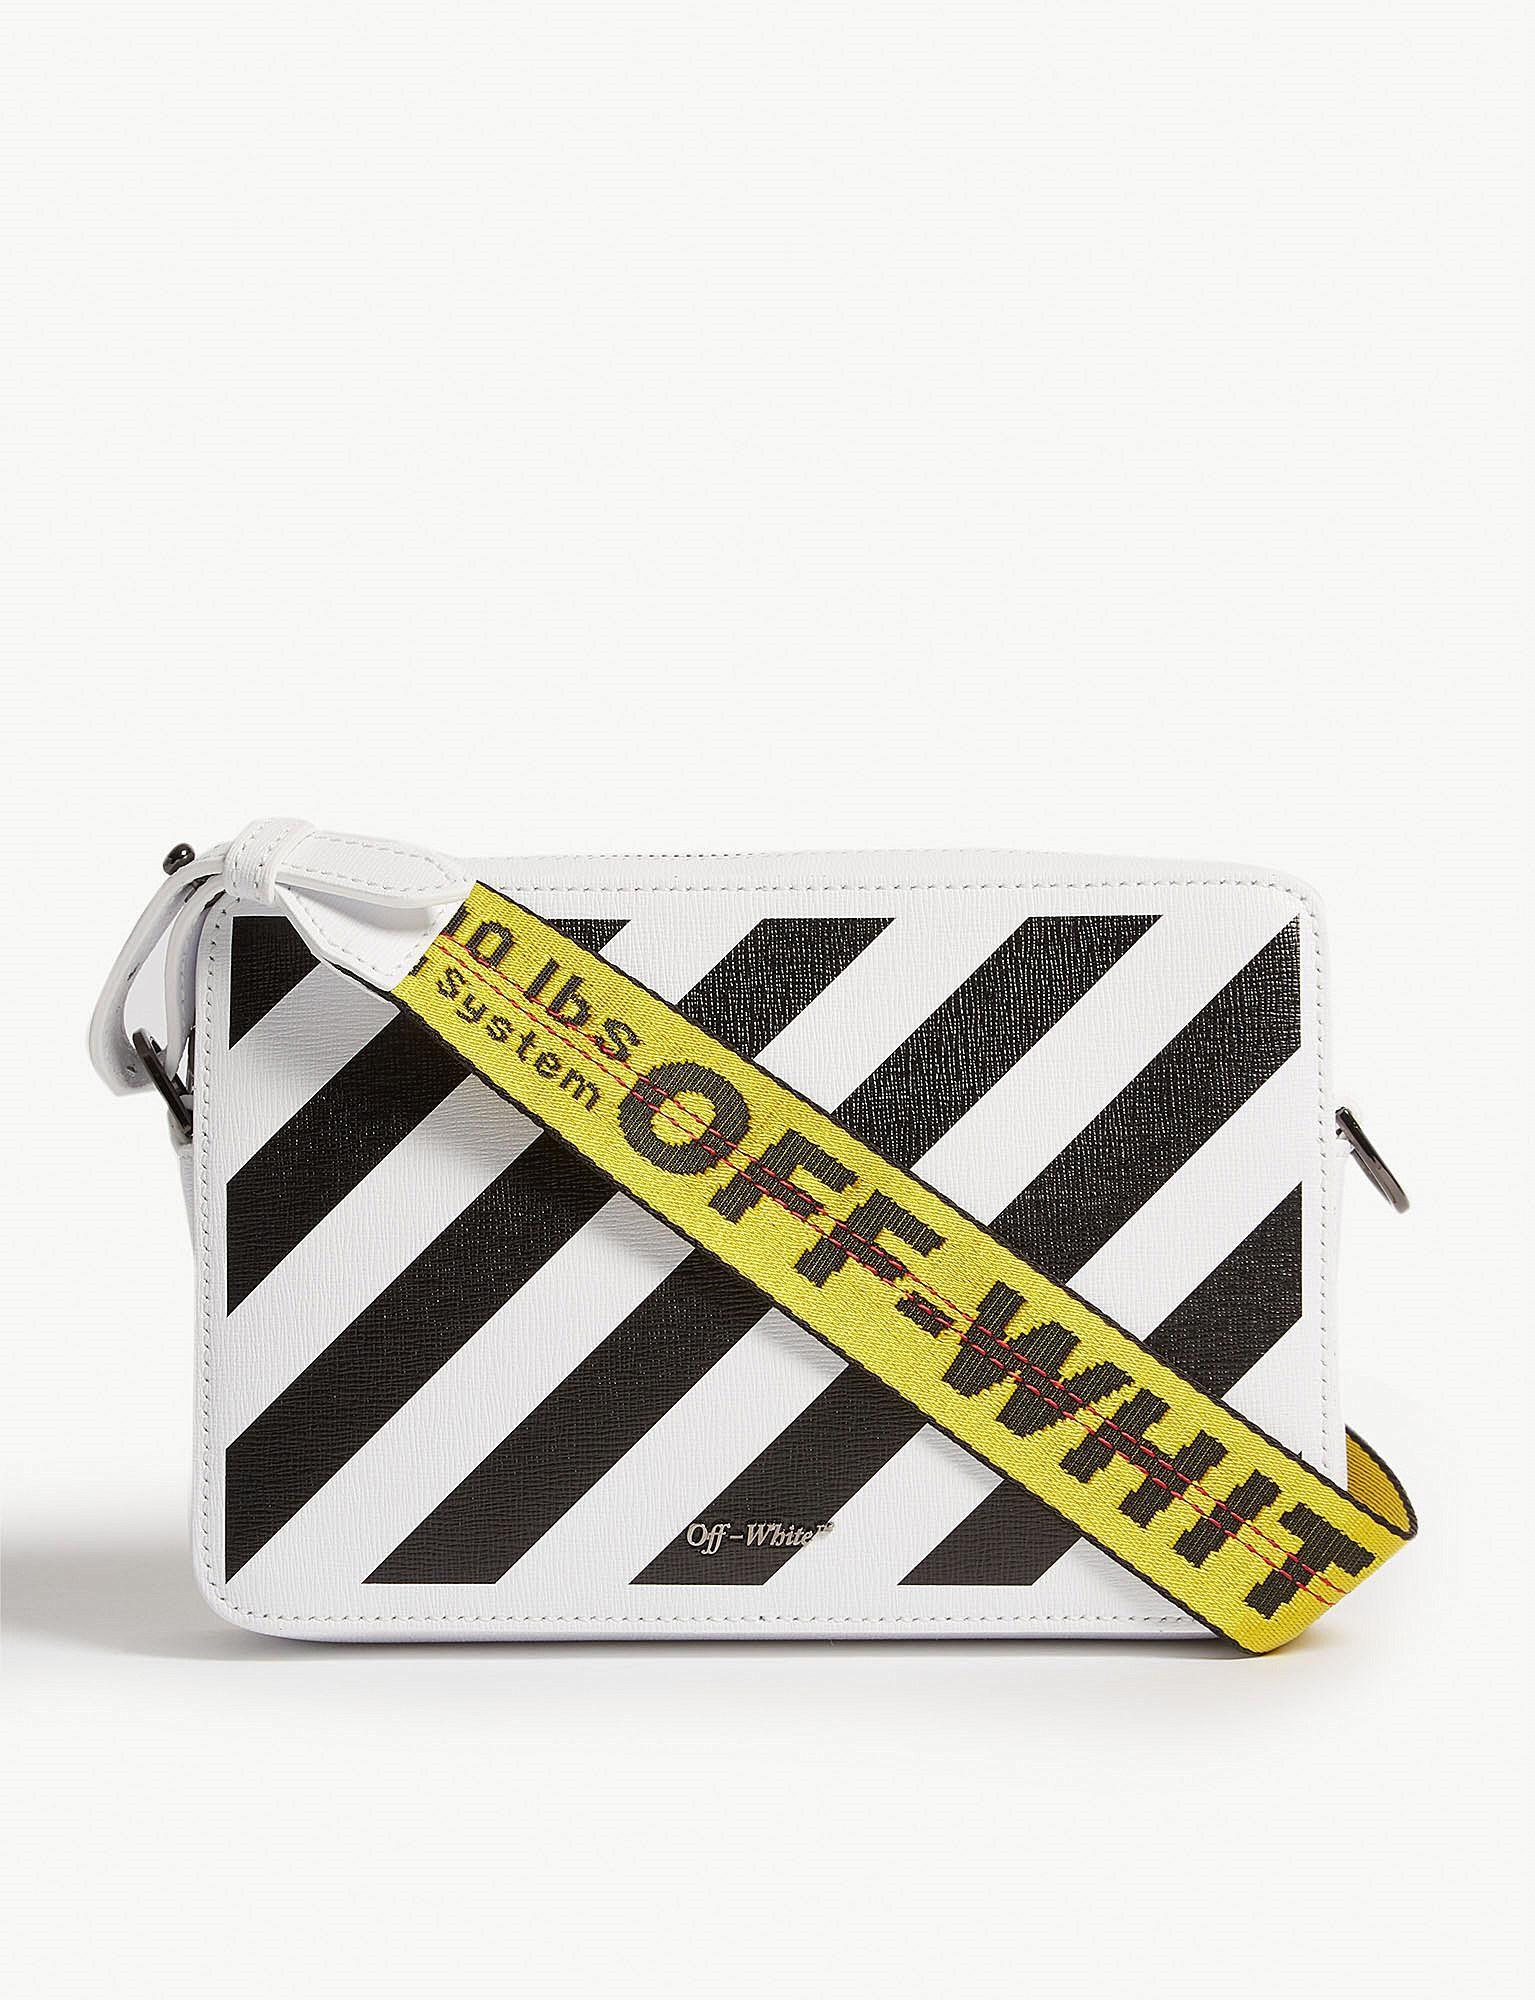 Stripes Off White Brand Logo - Lyst - Off-White C/O Virgil Abloh Diagonal Stripe Leather Camera And ...